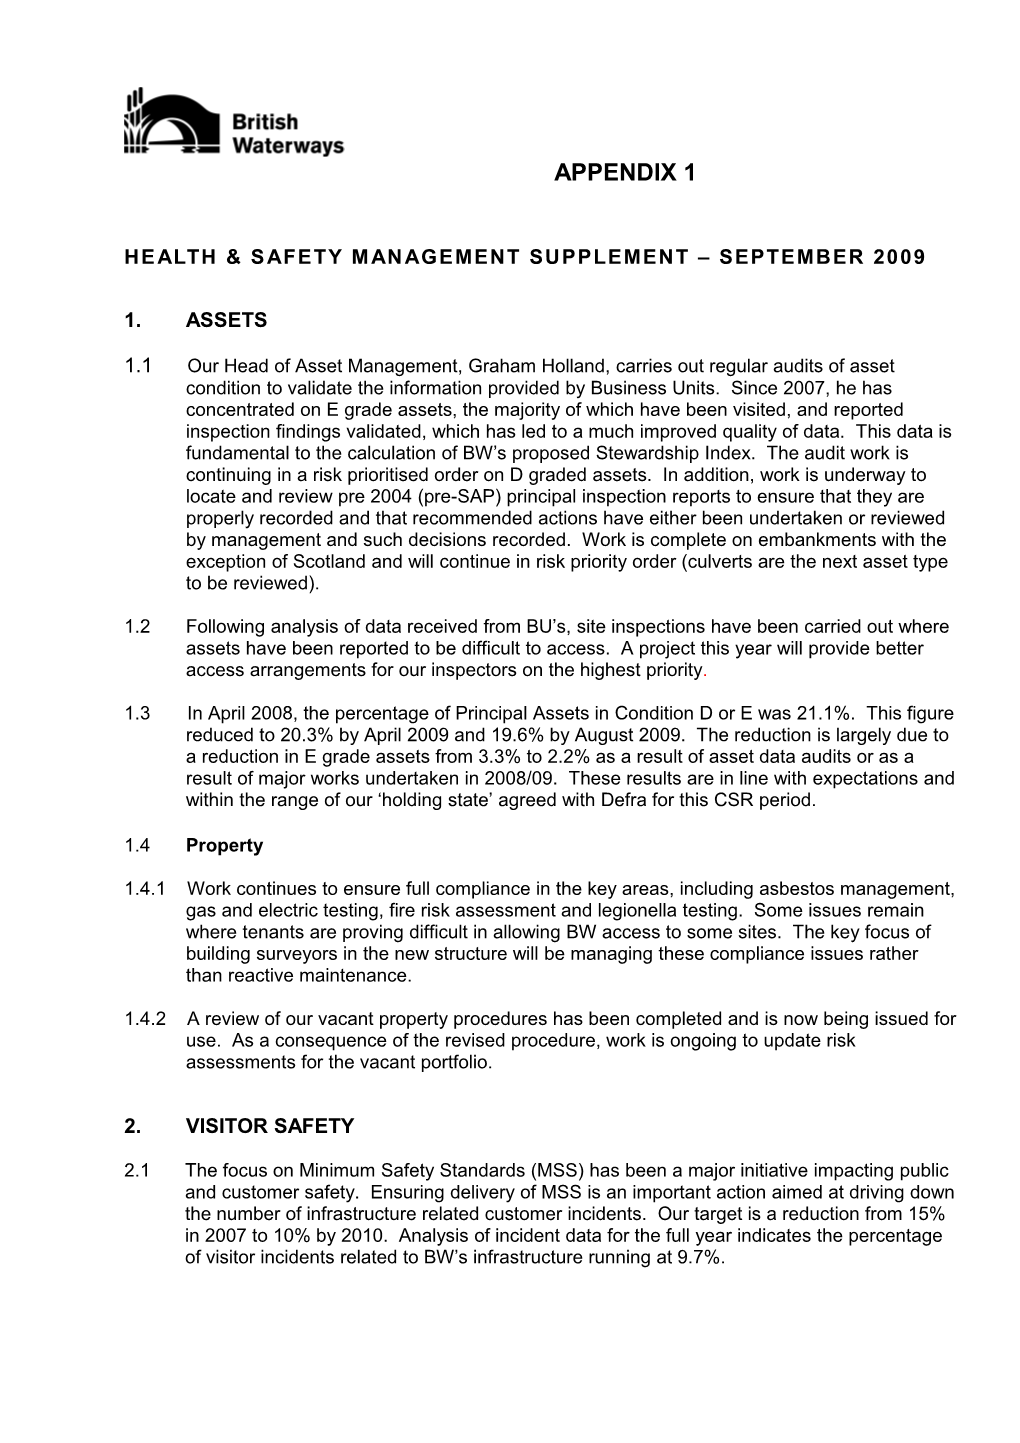 HEALTH & SAFETY MANAGEMENT Supplement SEPTEMBER2009